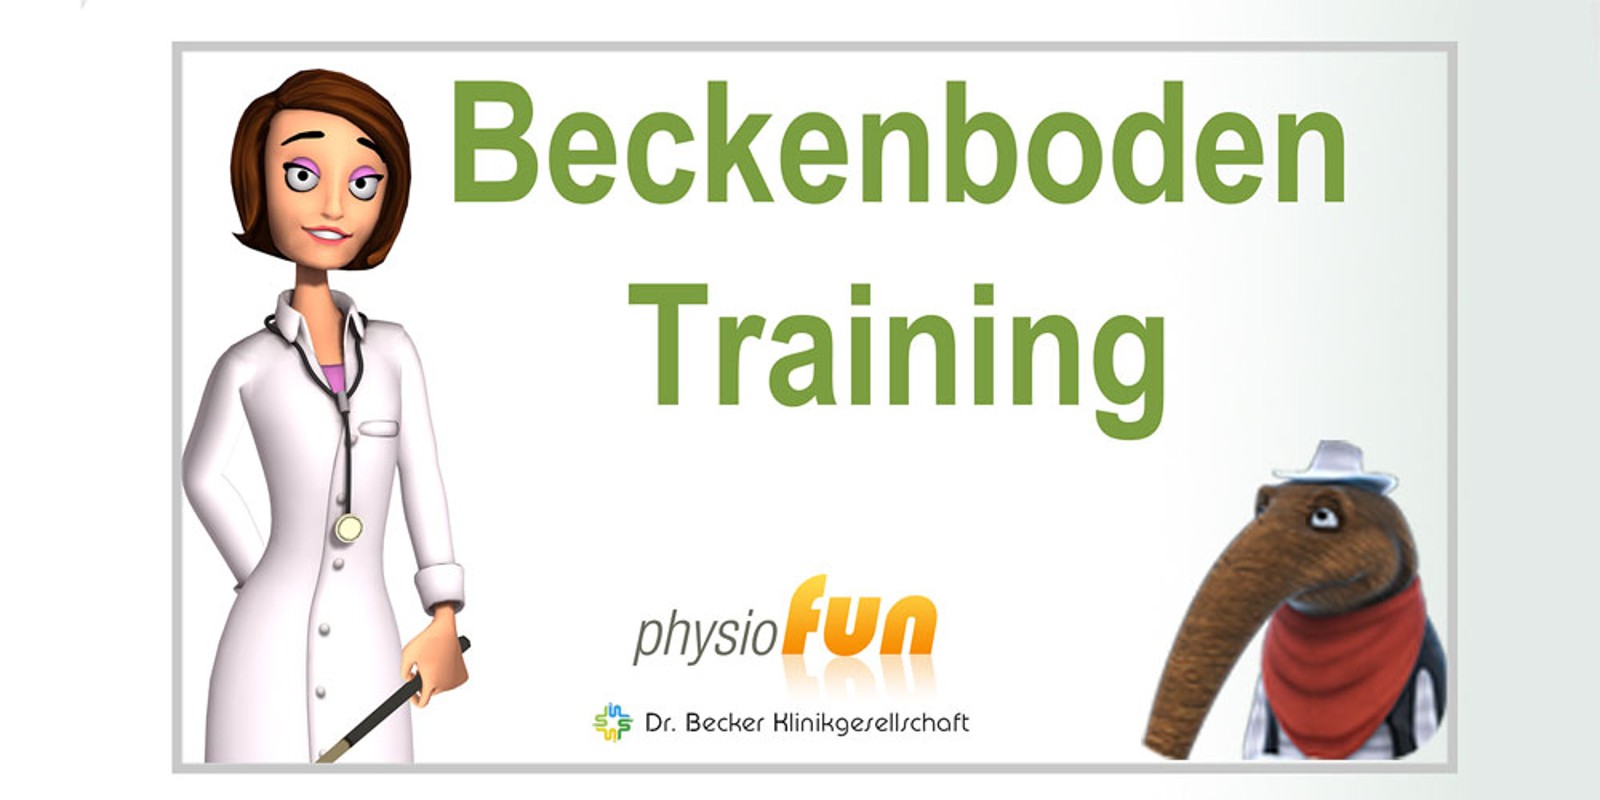 Beckenboden Training Physiofun